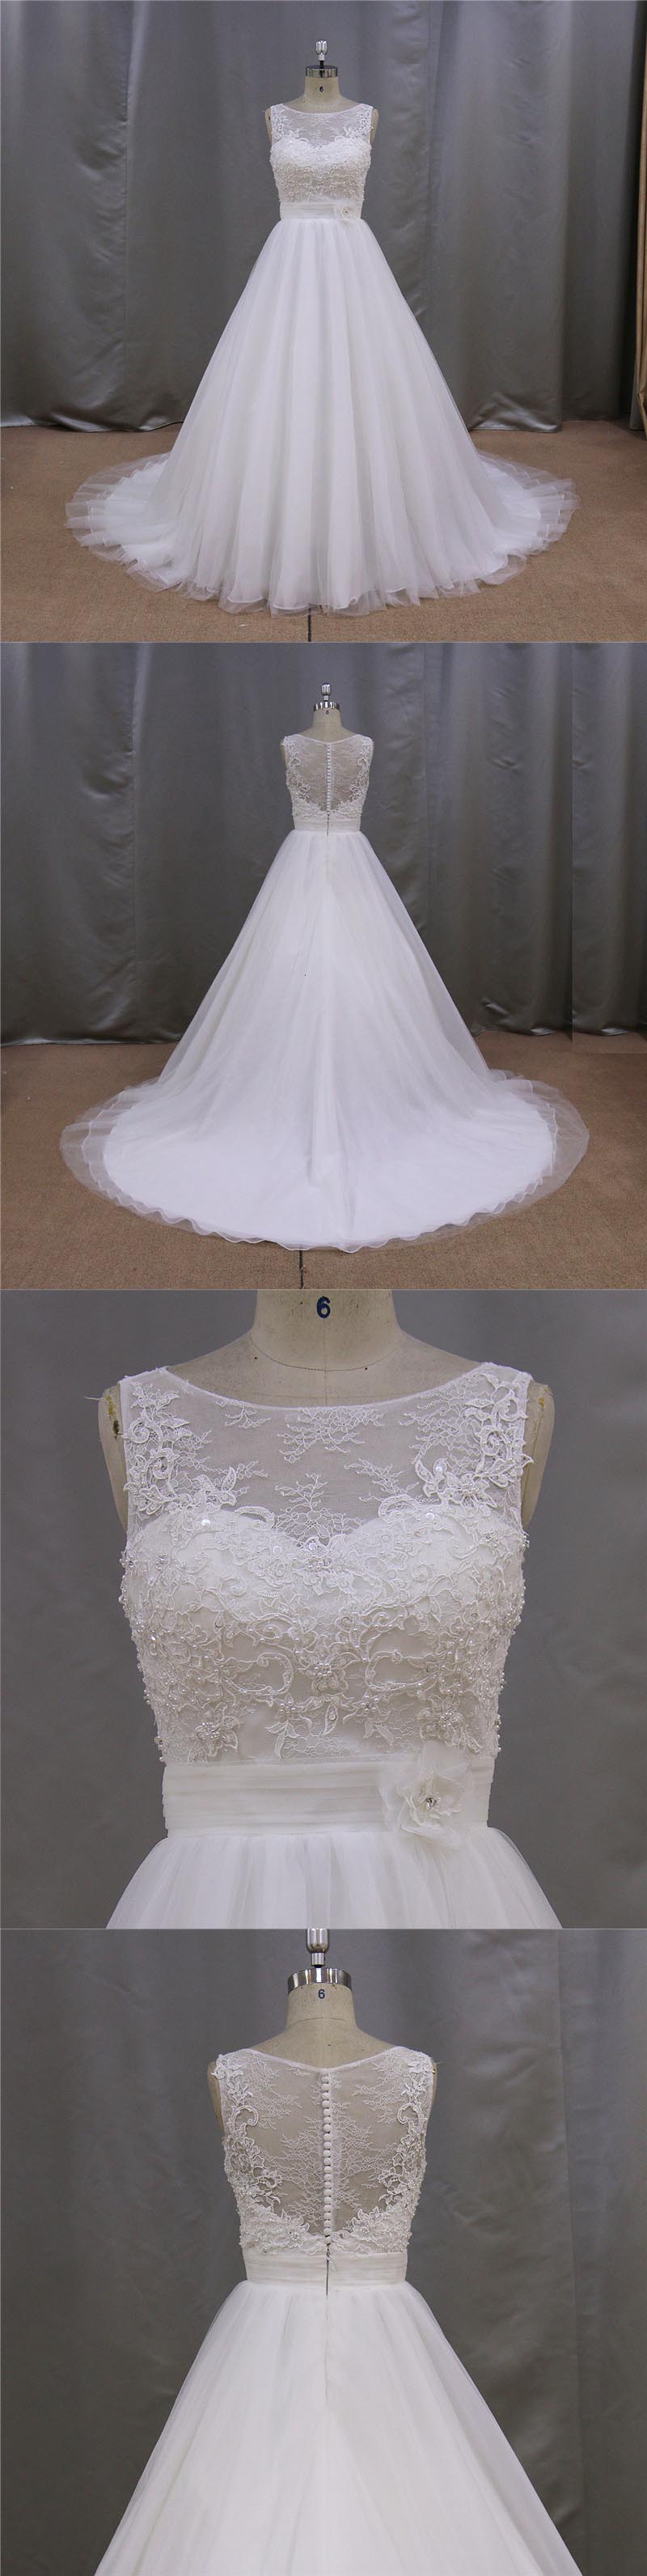 Wedding Dress with Flowers on The Waist Bridal Dress